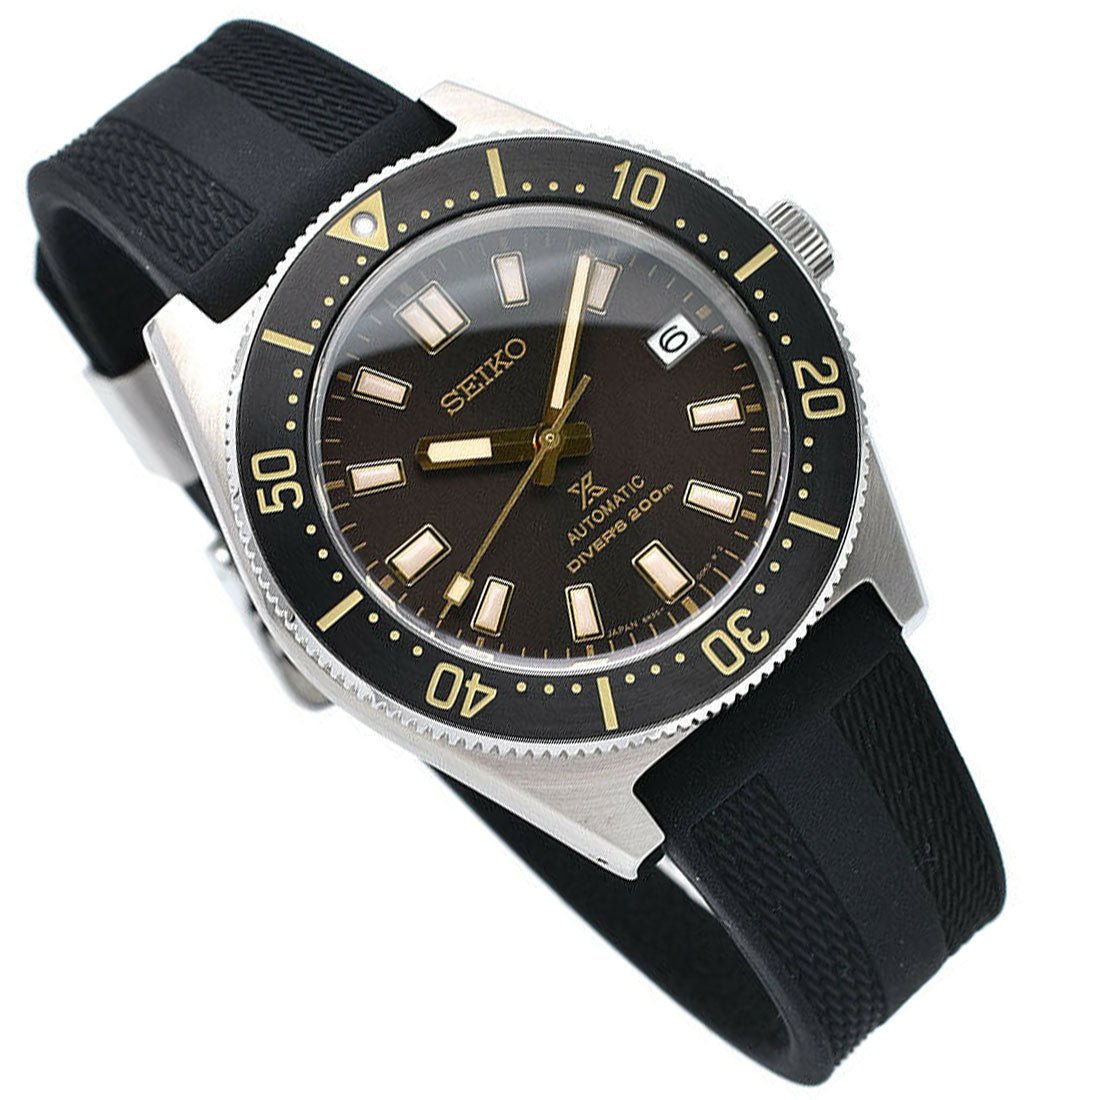 Seiko Prospex Automatic Diving 24 Jewels JDM Watch SBDC105 -Seiko